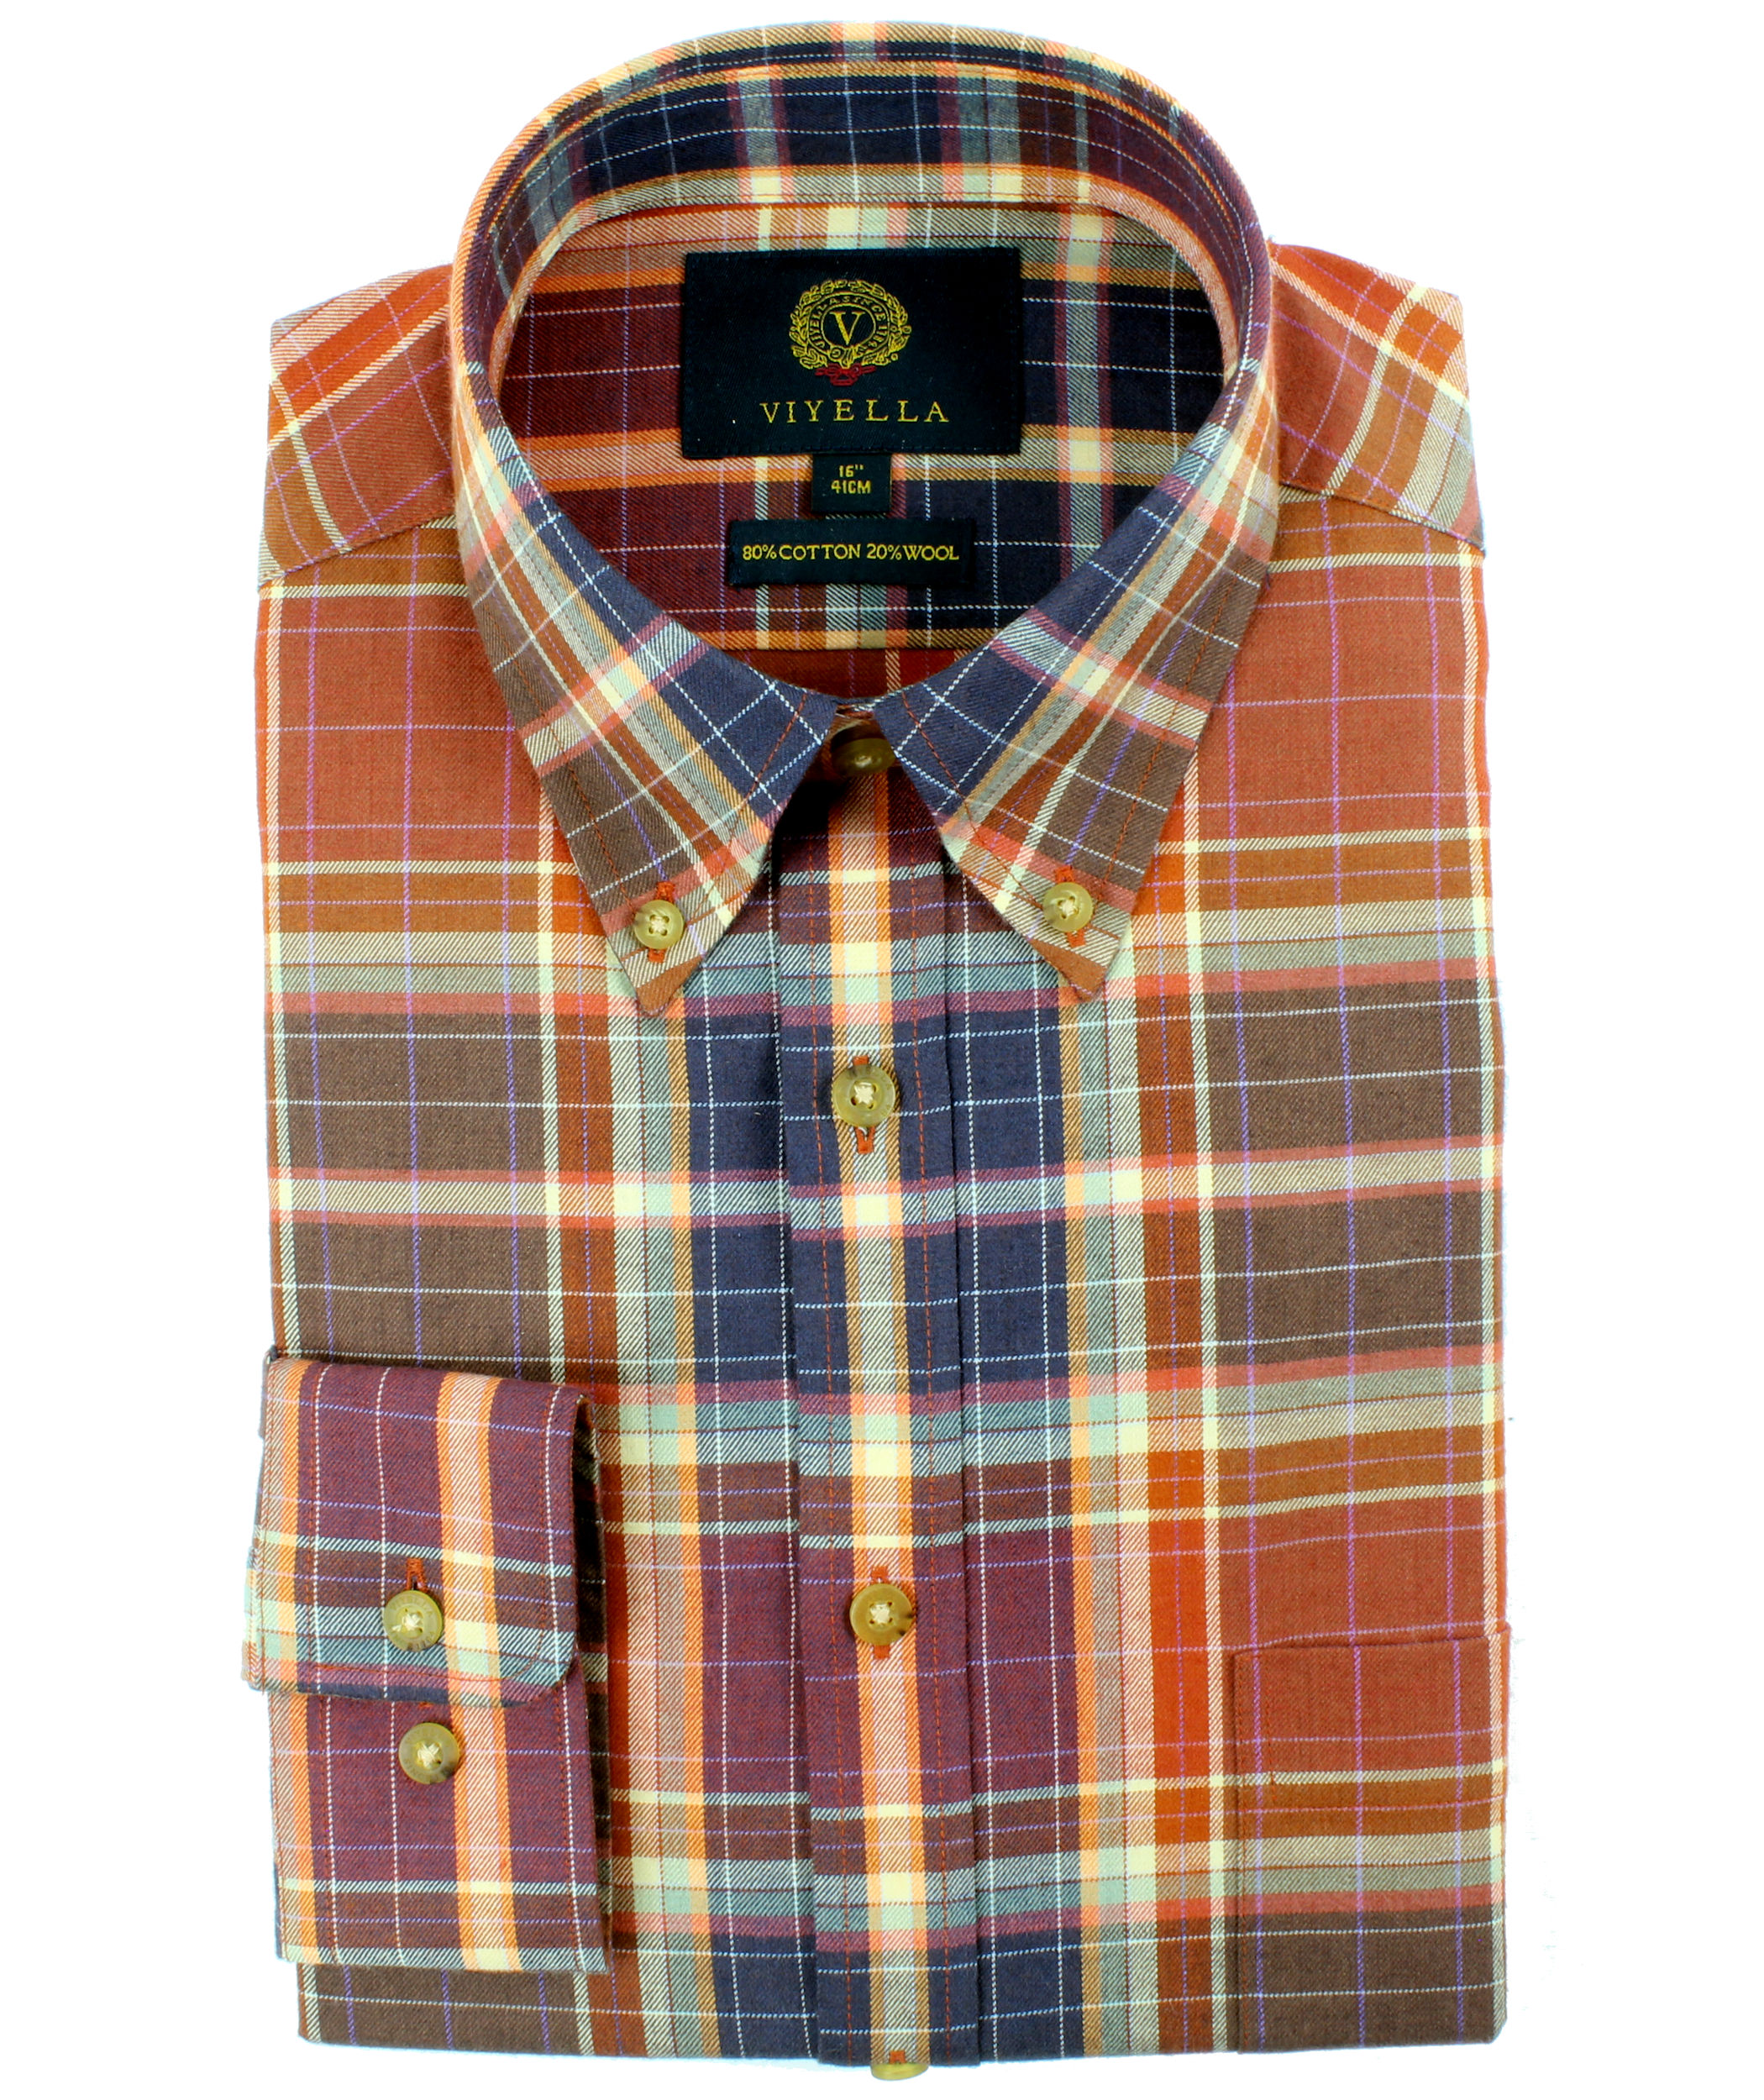 Viyella 80/20 Autumn Brown Plaid Classic Fit Shirt with Button Down ...